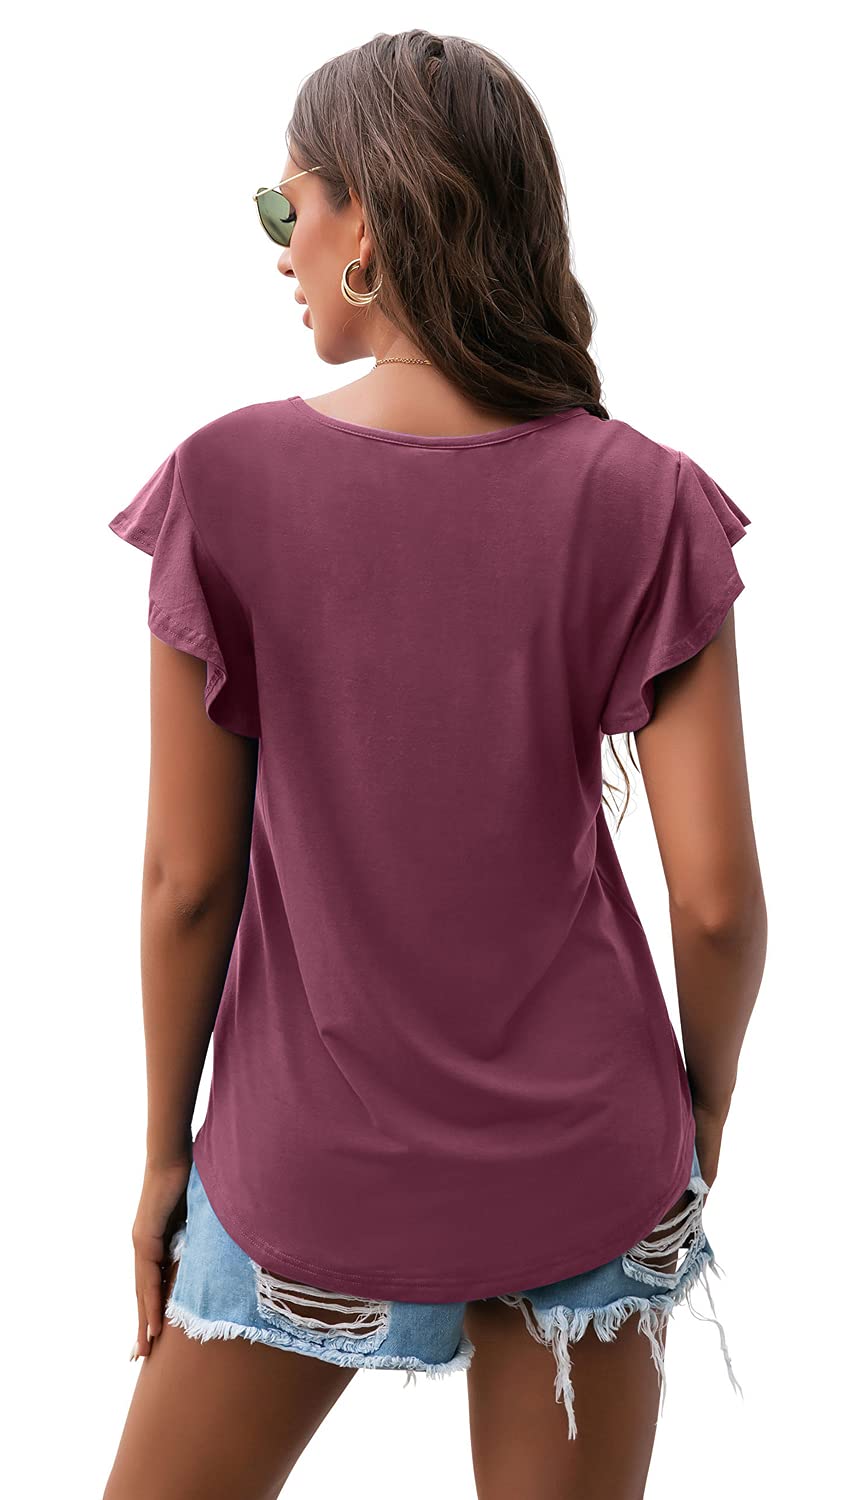 RYRJJ Womens Summer Ruffle Sleeve Tshirts Eyelet Crew Neck Loose Fit Casual  Blouse Tops(Purple,M) 